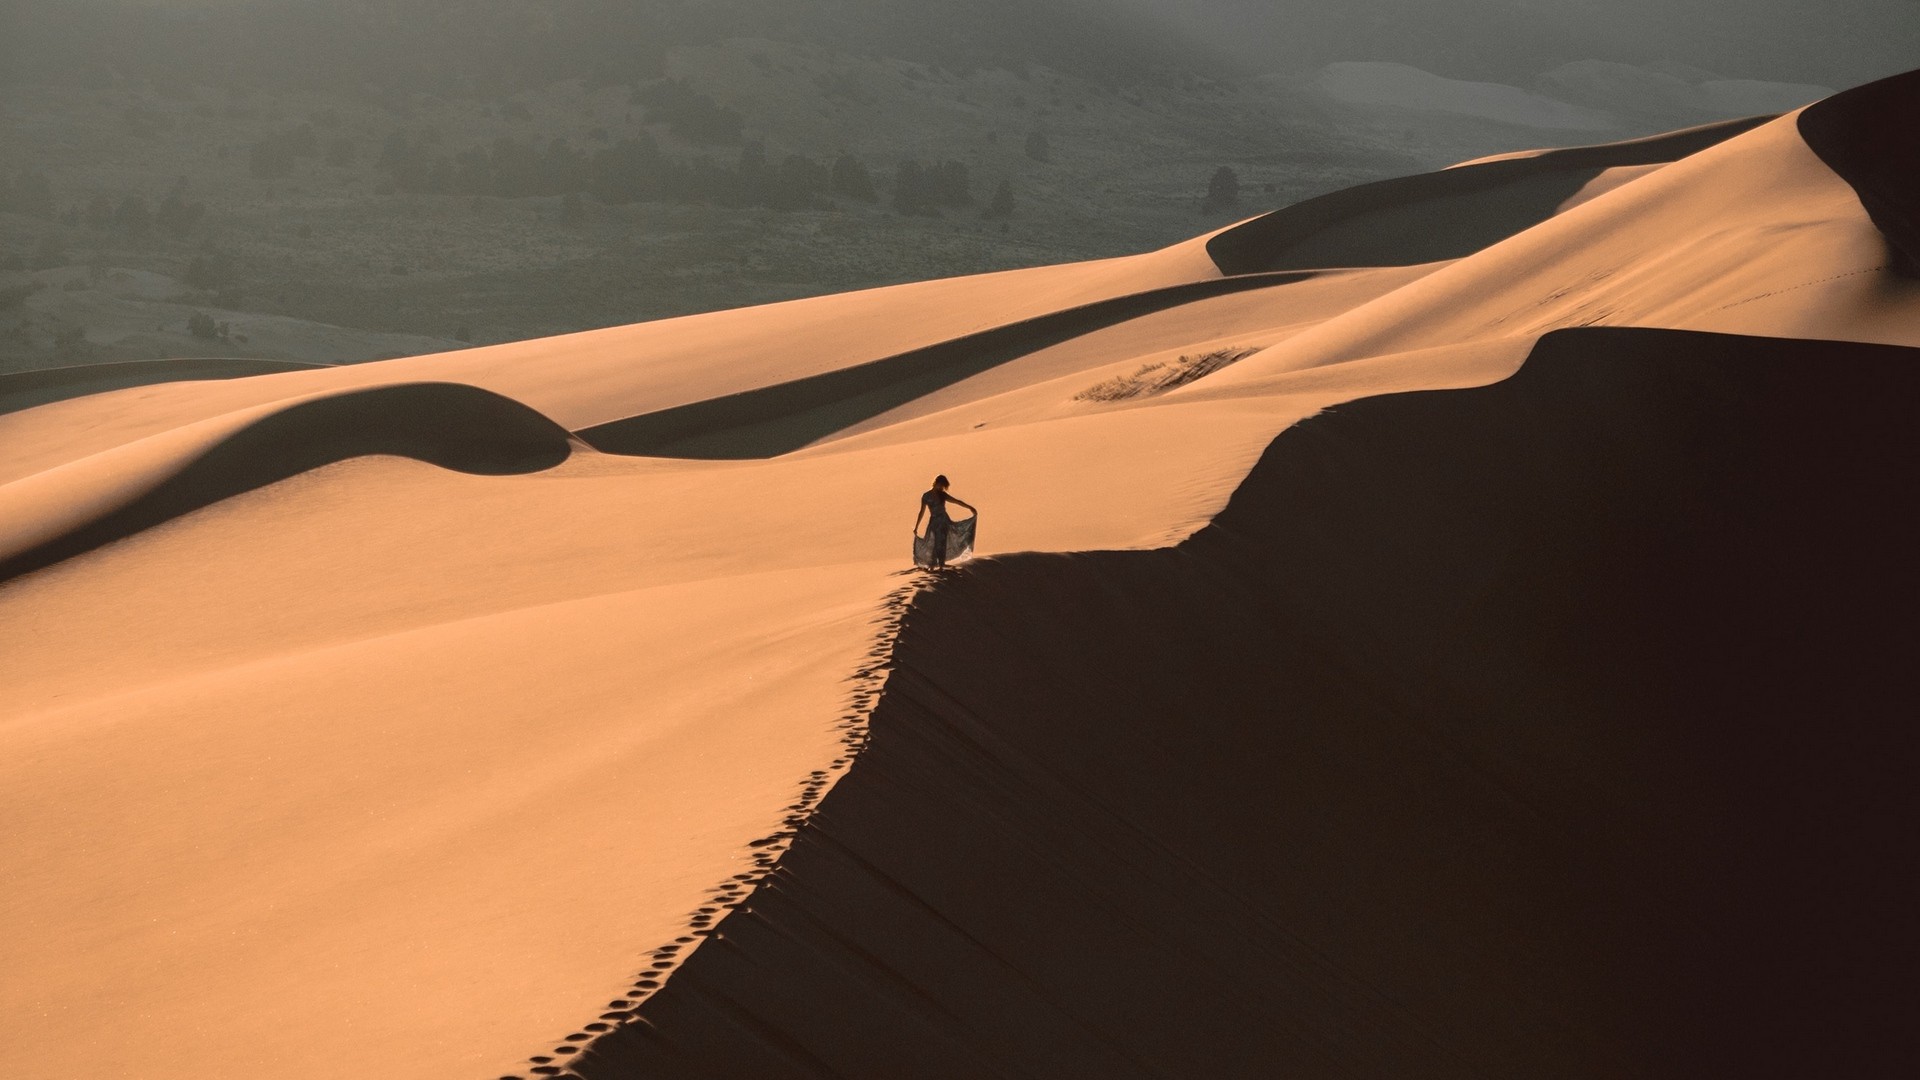 Desert, sand, dune, man, footprints | picture, photo, desktop wallpaper.